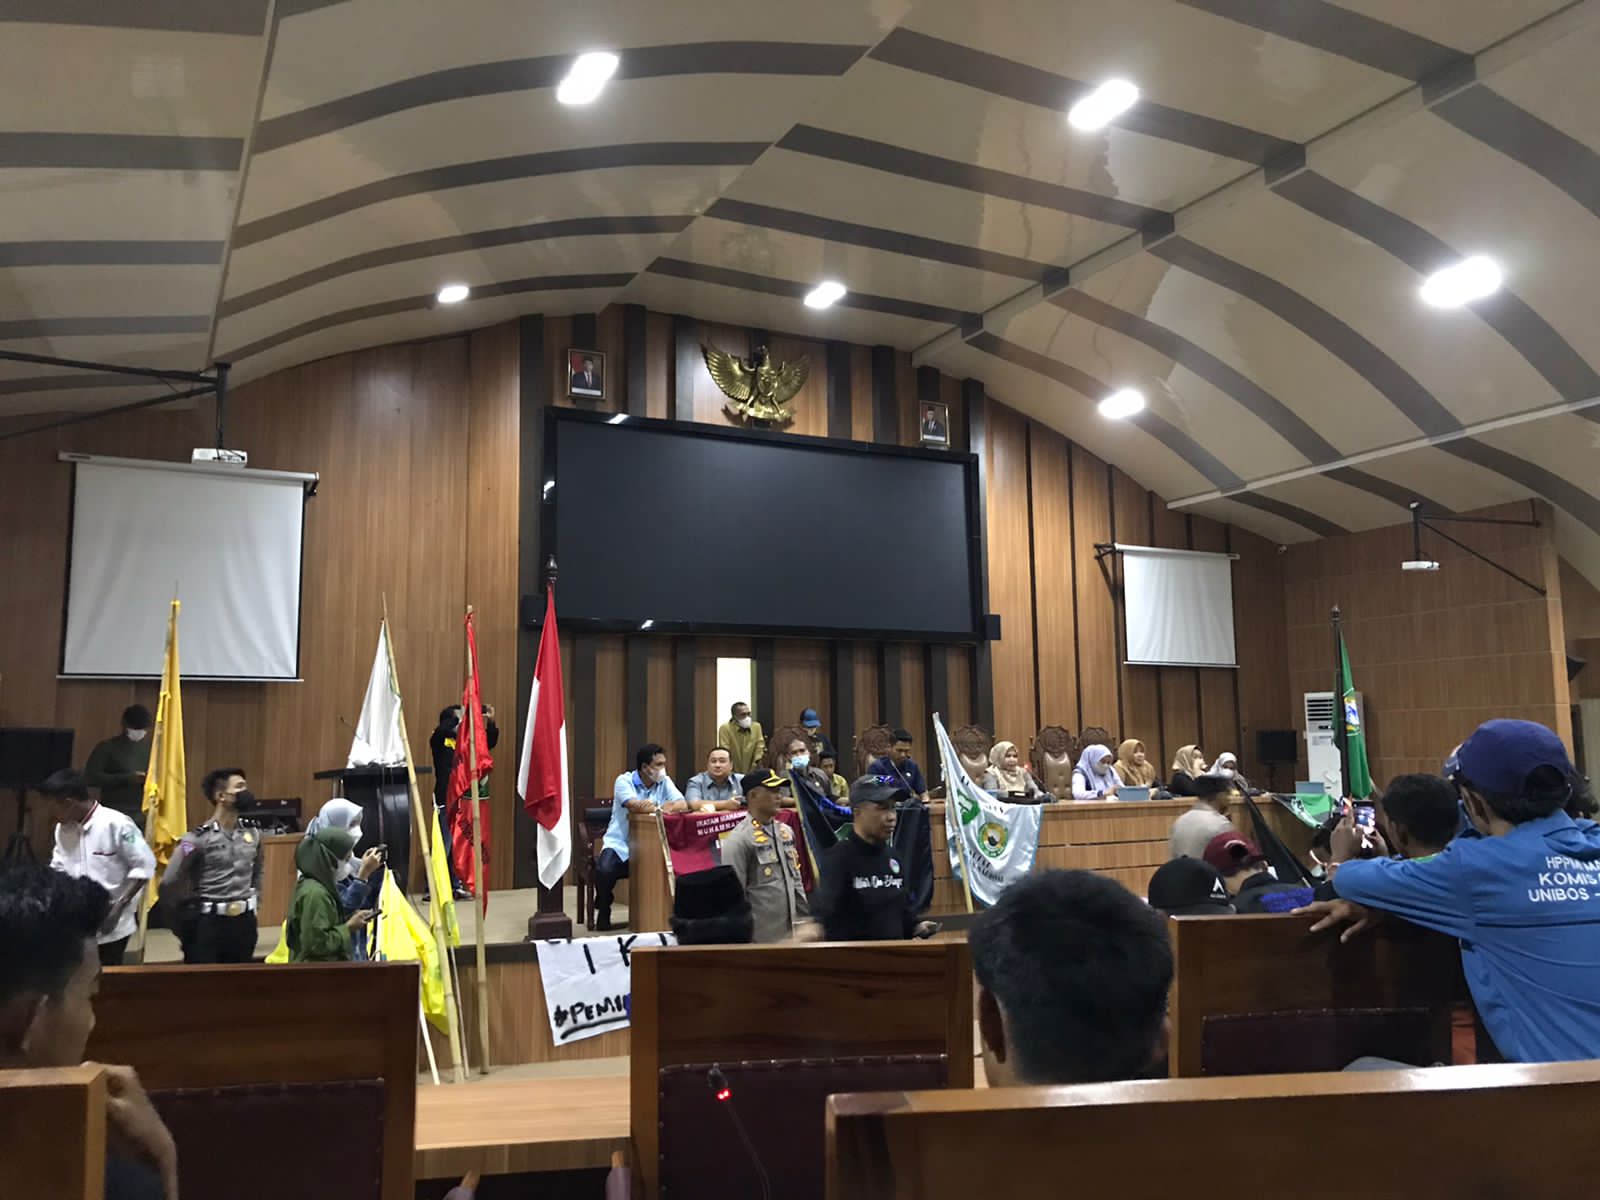 AMARAK Gelar Aksi Secara Damai, 15 Tuntutan Diterima DPRD Kab. Maros